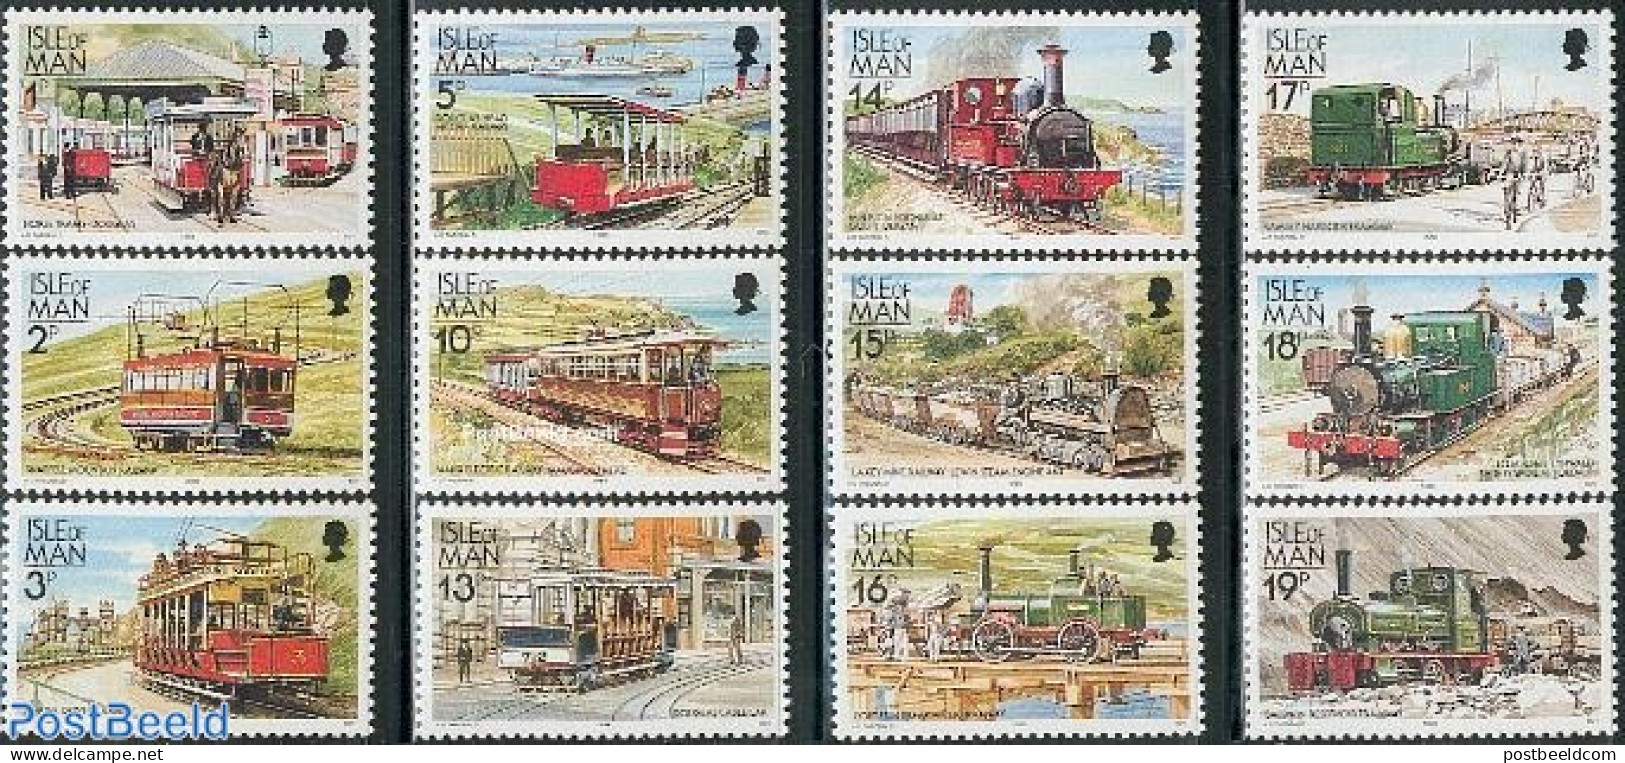 Isle Of Man 1988 Definitives, Railways, Tramways 12v, Mint NH, Transport - Railways - Trams - Trains